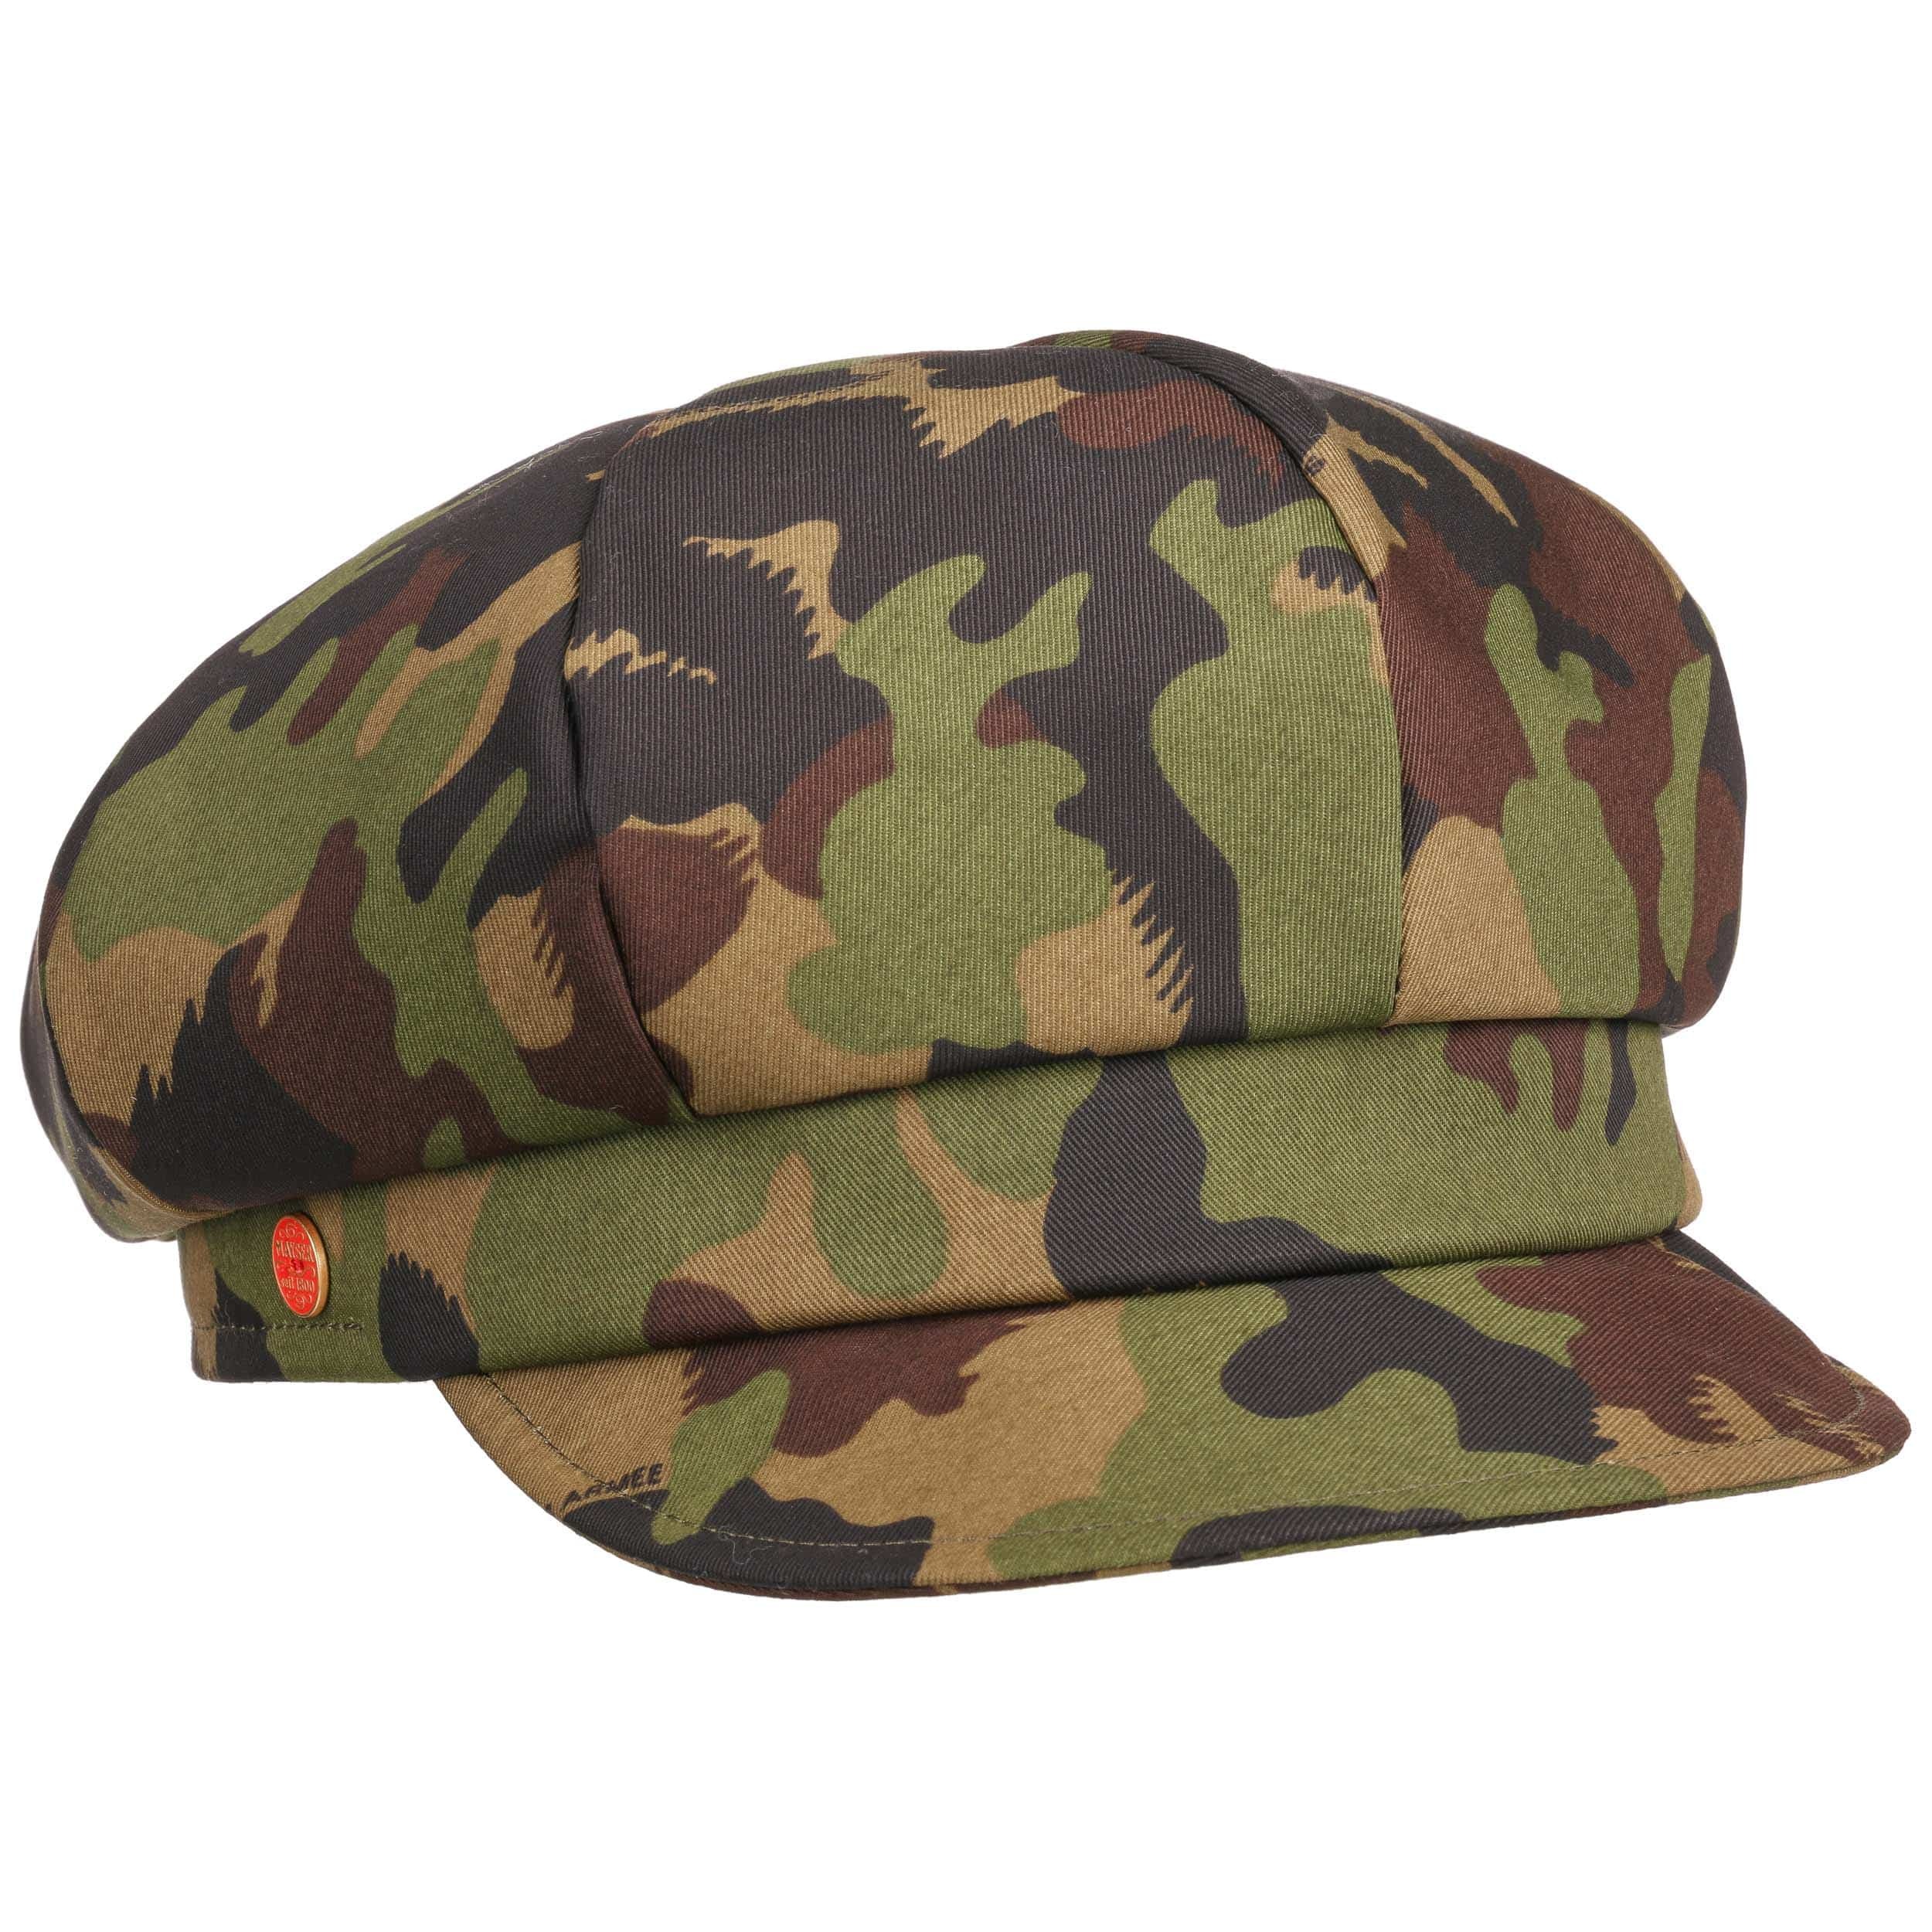 Mayser Anja Camouflage Newsboy Cap Peaked caps Baker boy hat